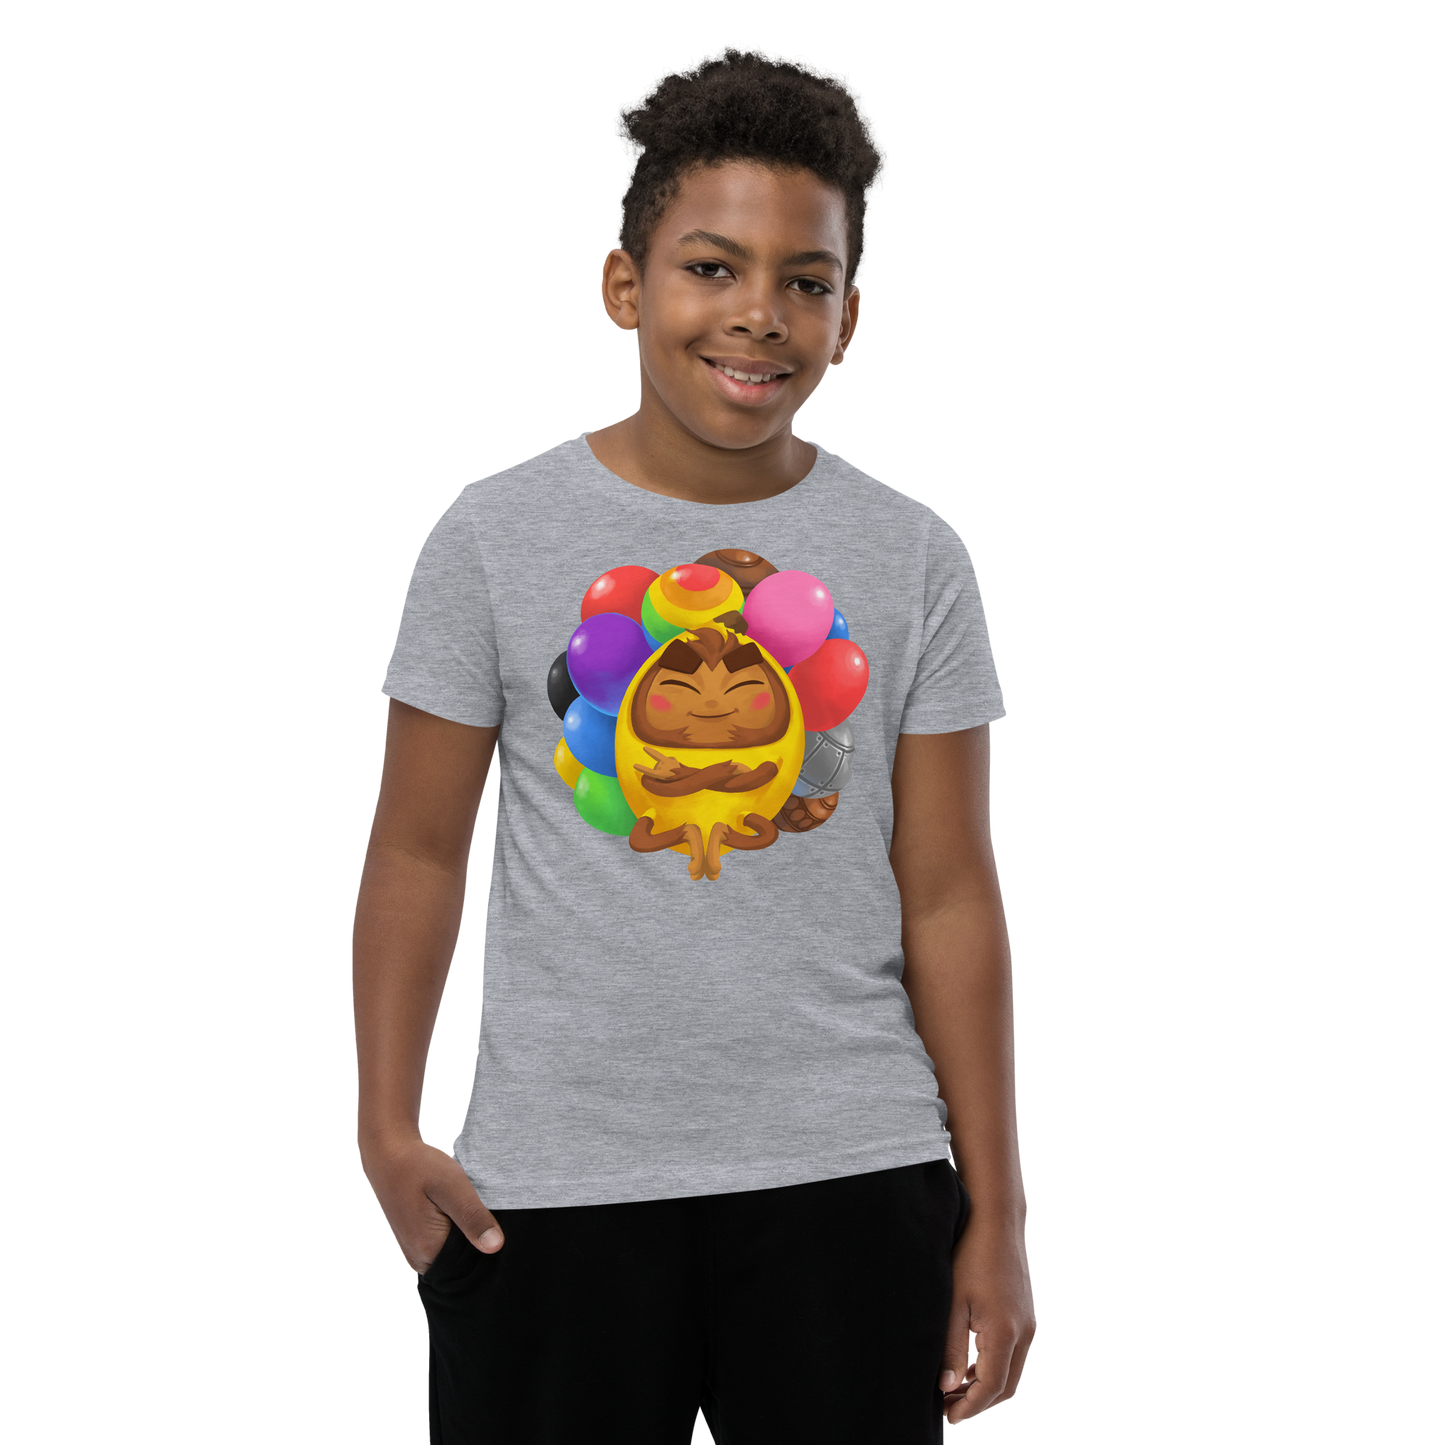 Cool Banana Monkey Shirt (Youth)